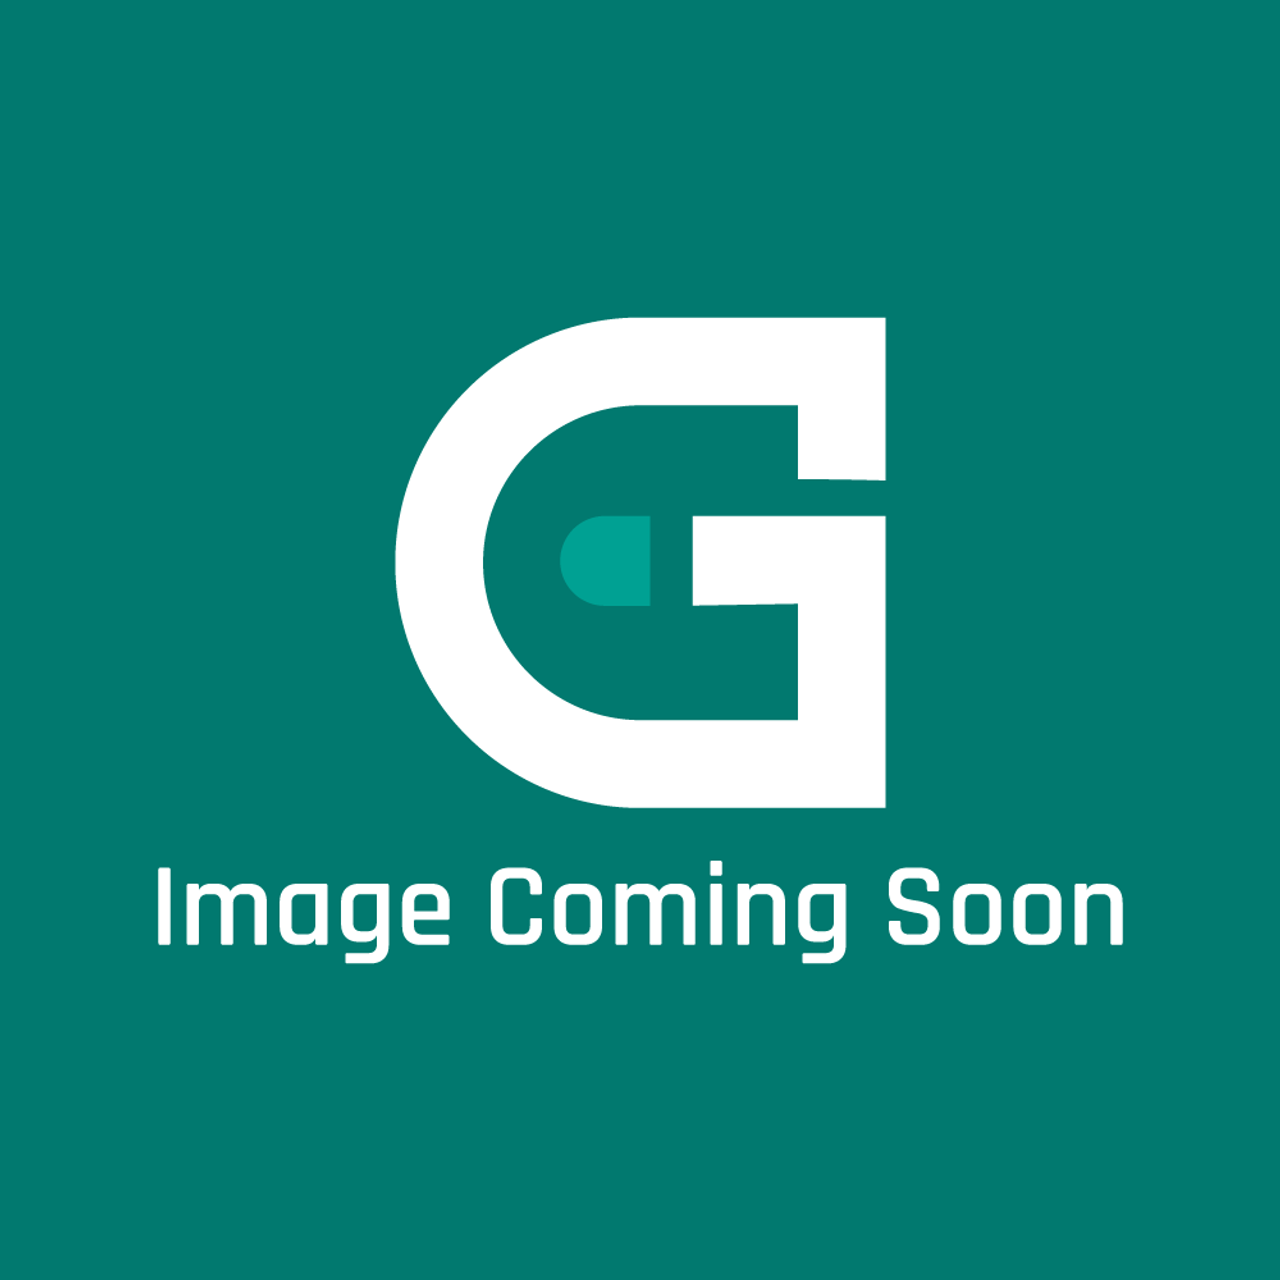 Delfield HZP00056 - Relay Ice Maker - Image Coming Soon!